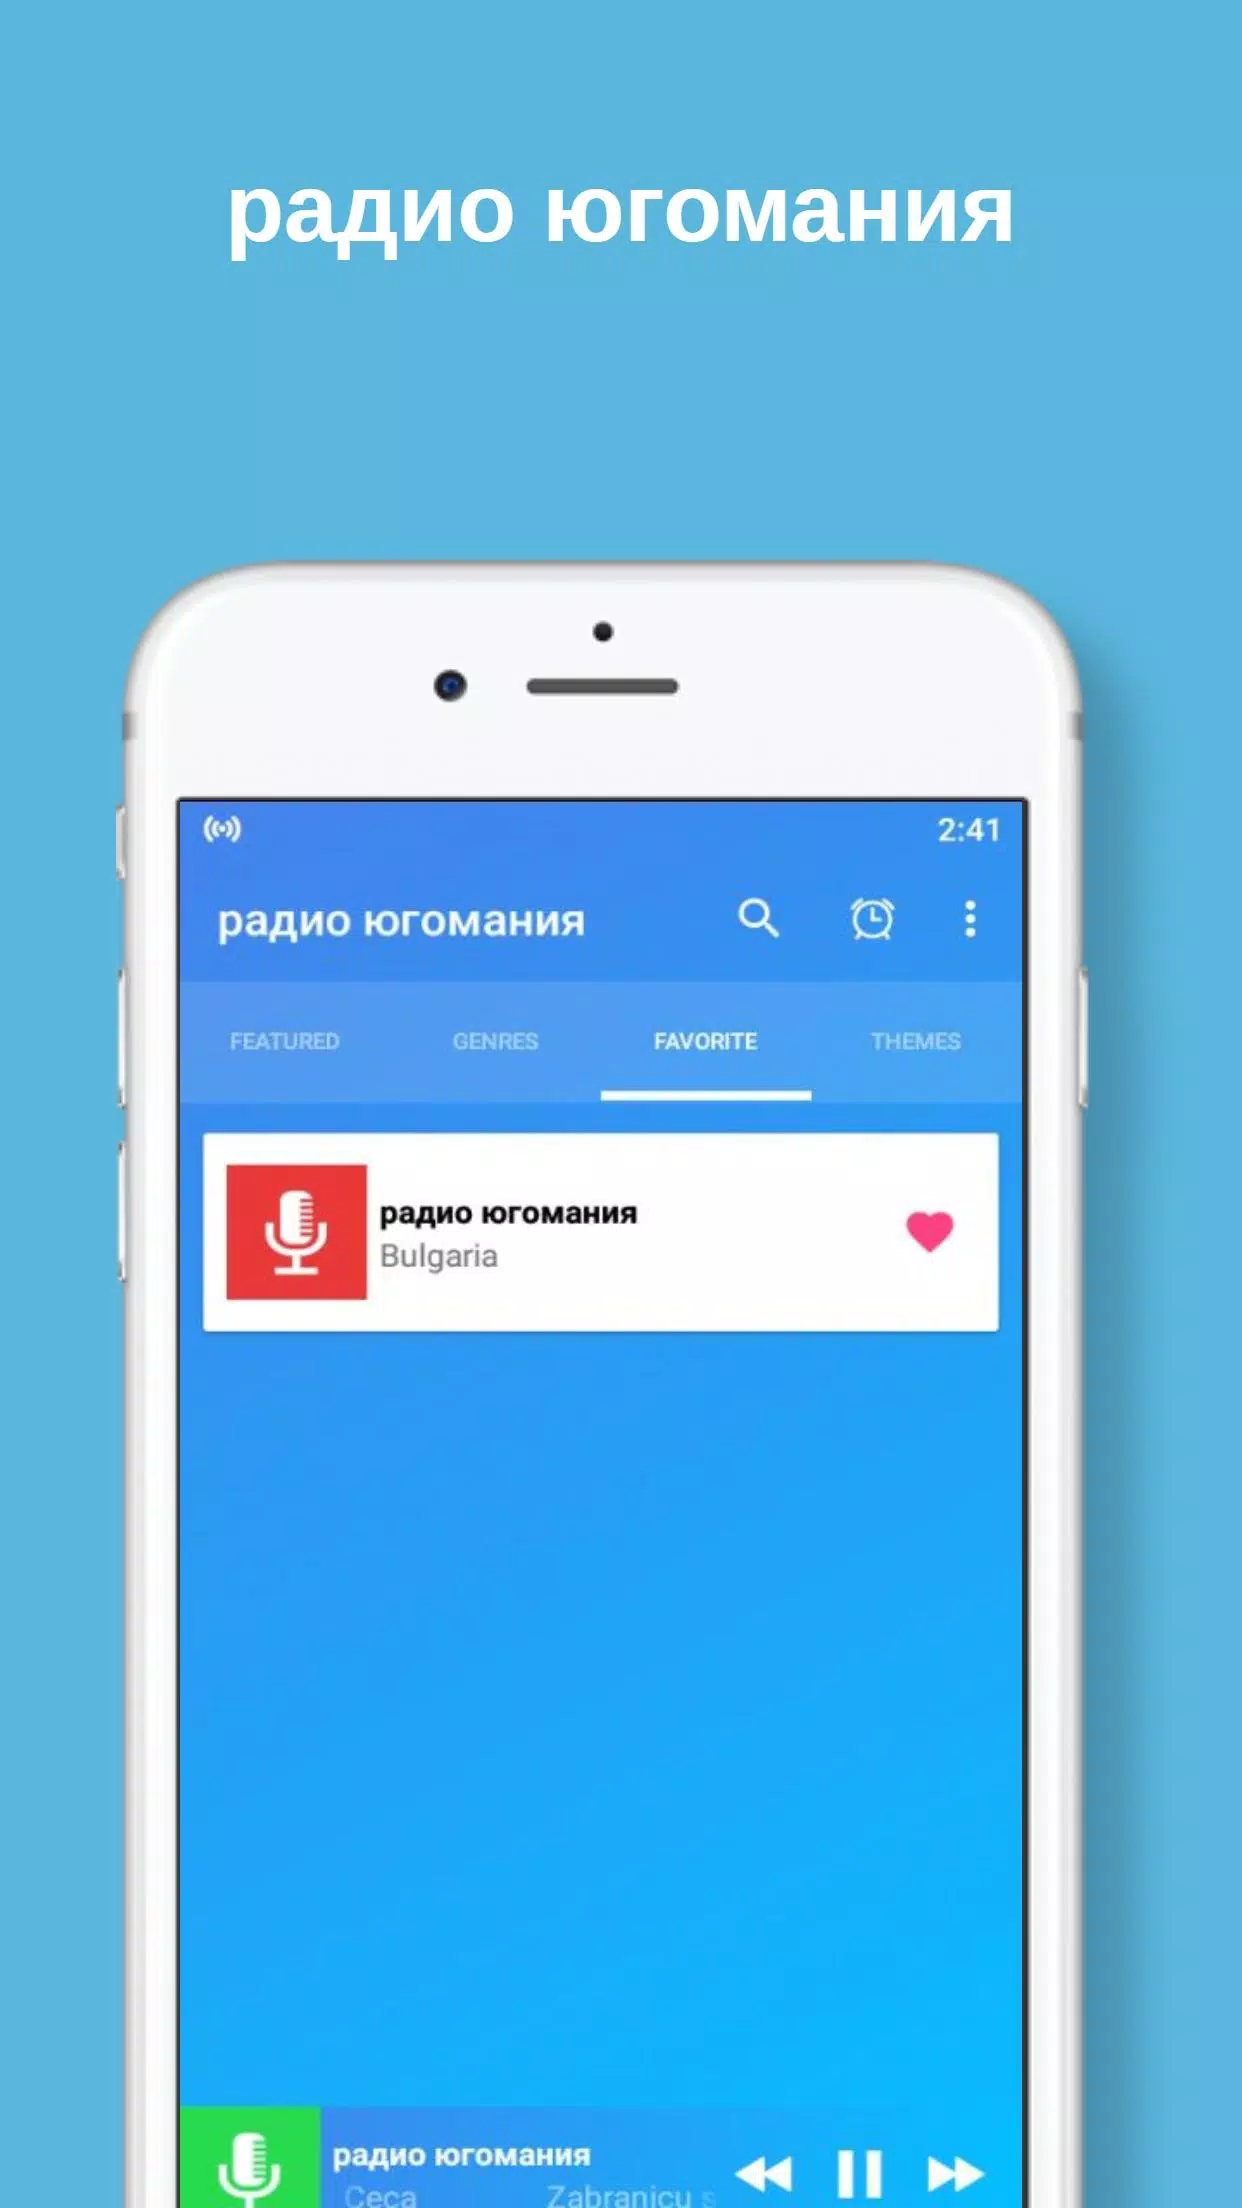 радио югомания App BG APK for Android Download